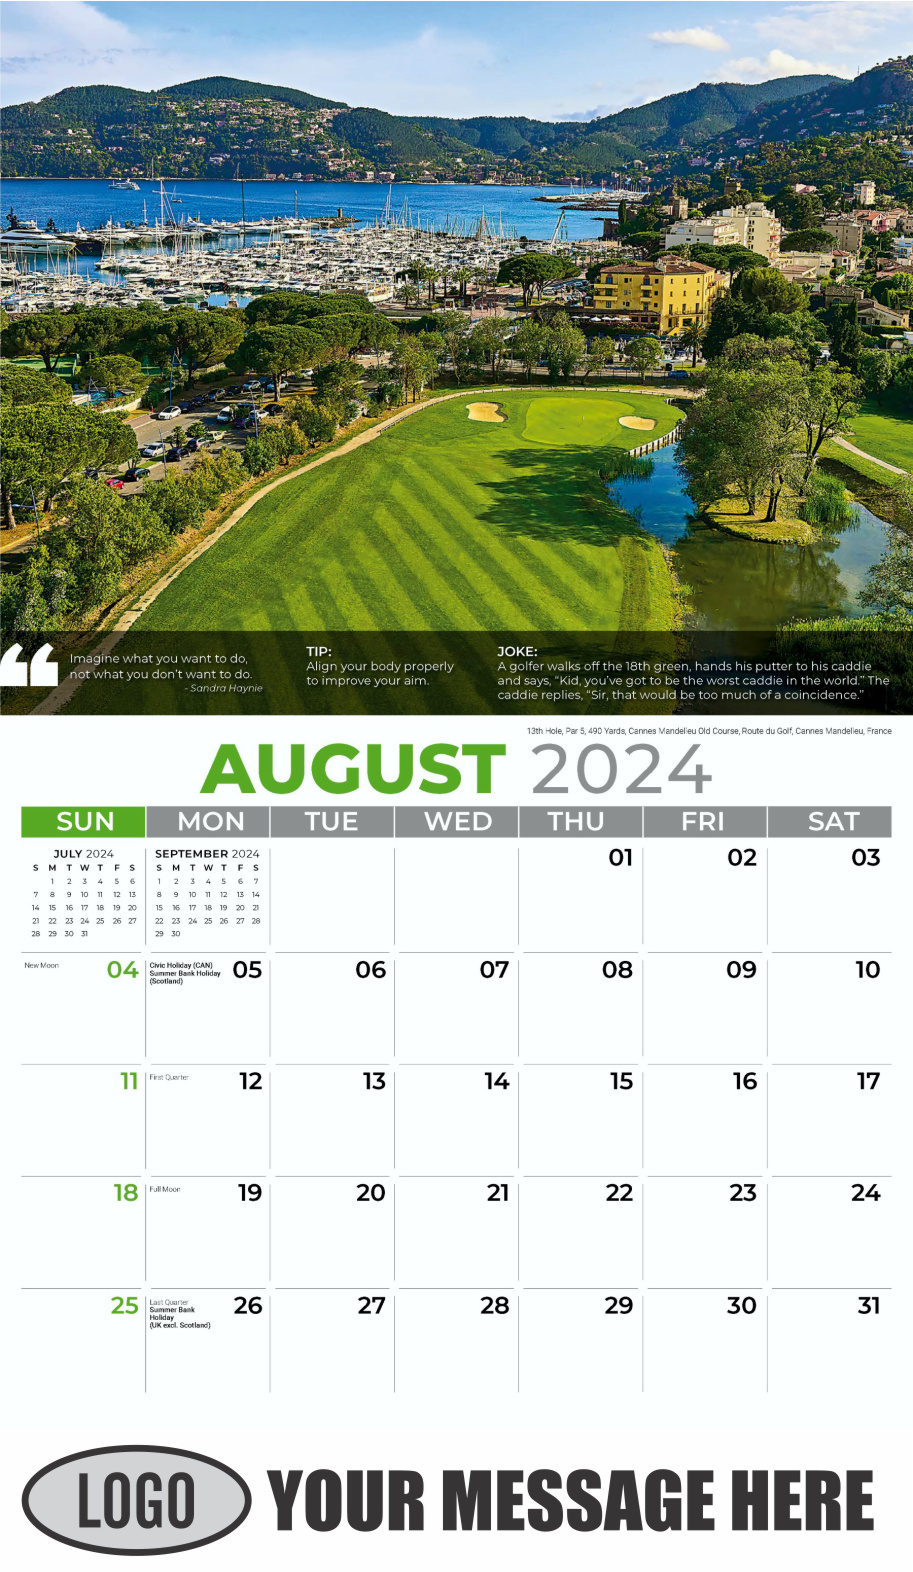 Golf Tips 2024 Business Promo Calendar - August